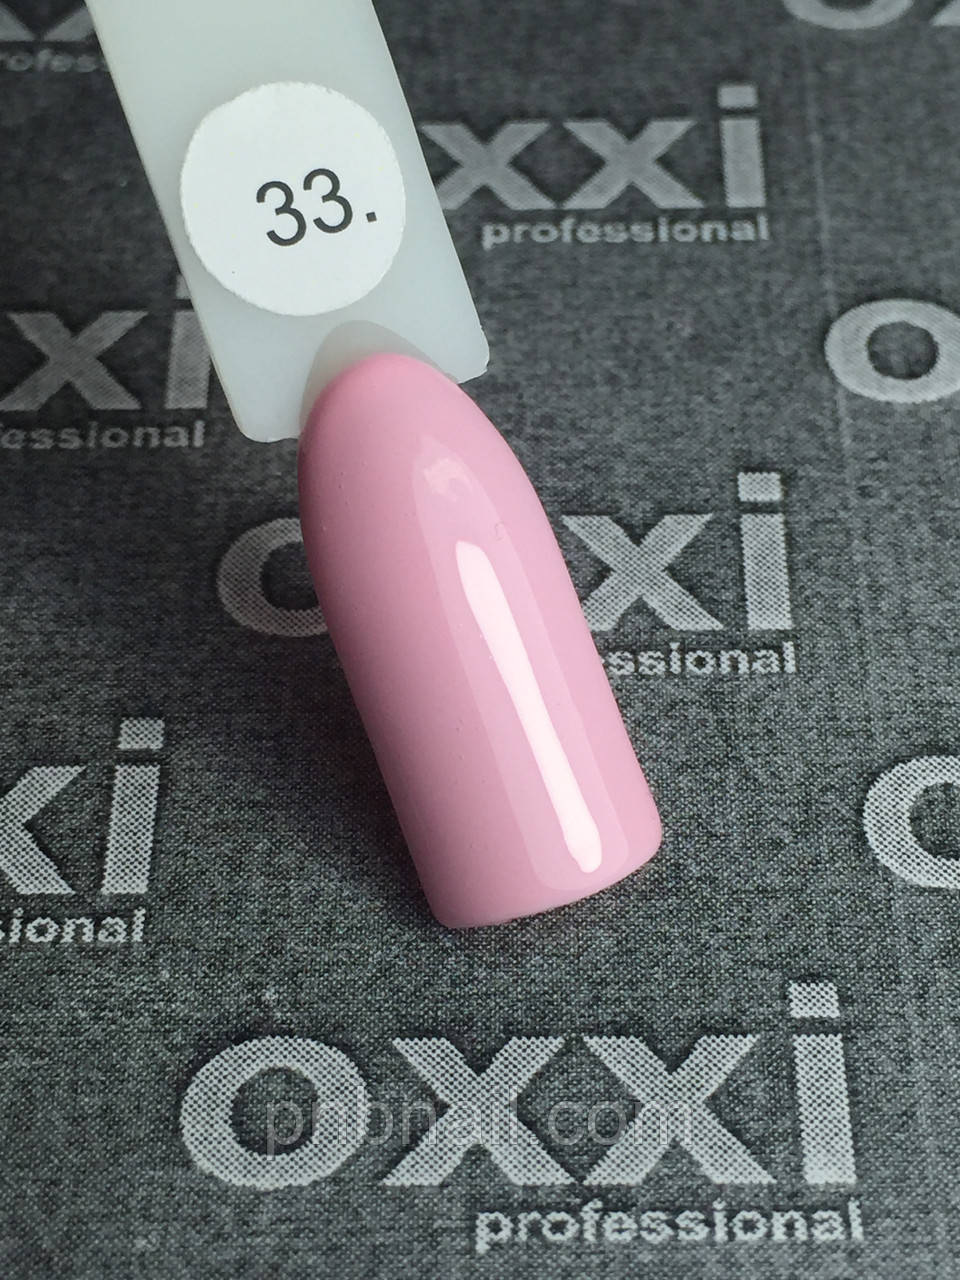 Гель-лак OXXI Professional No033, 10 мл